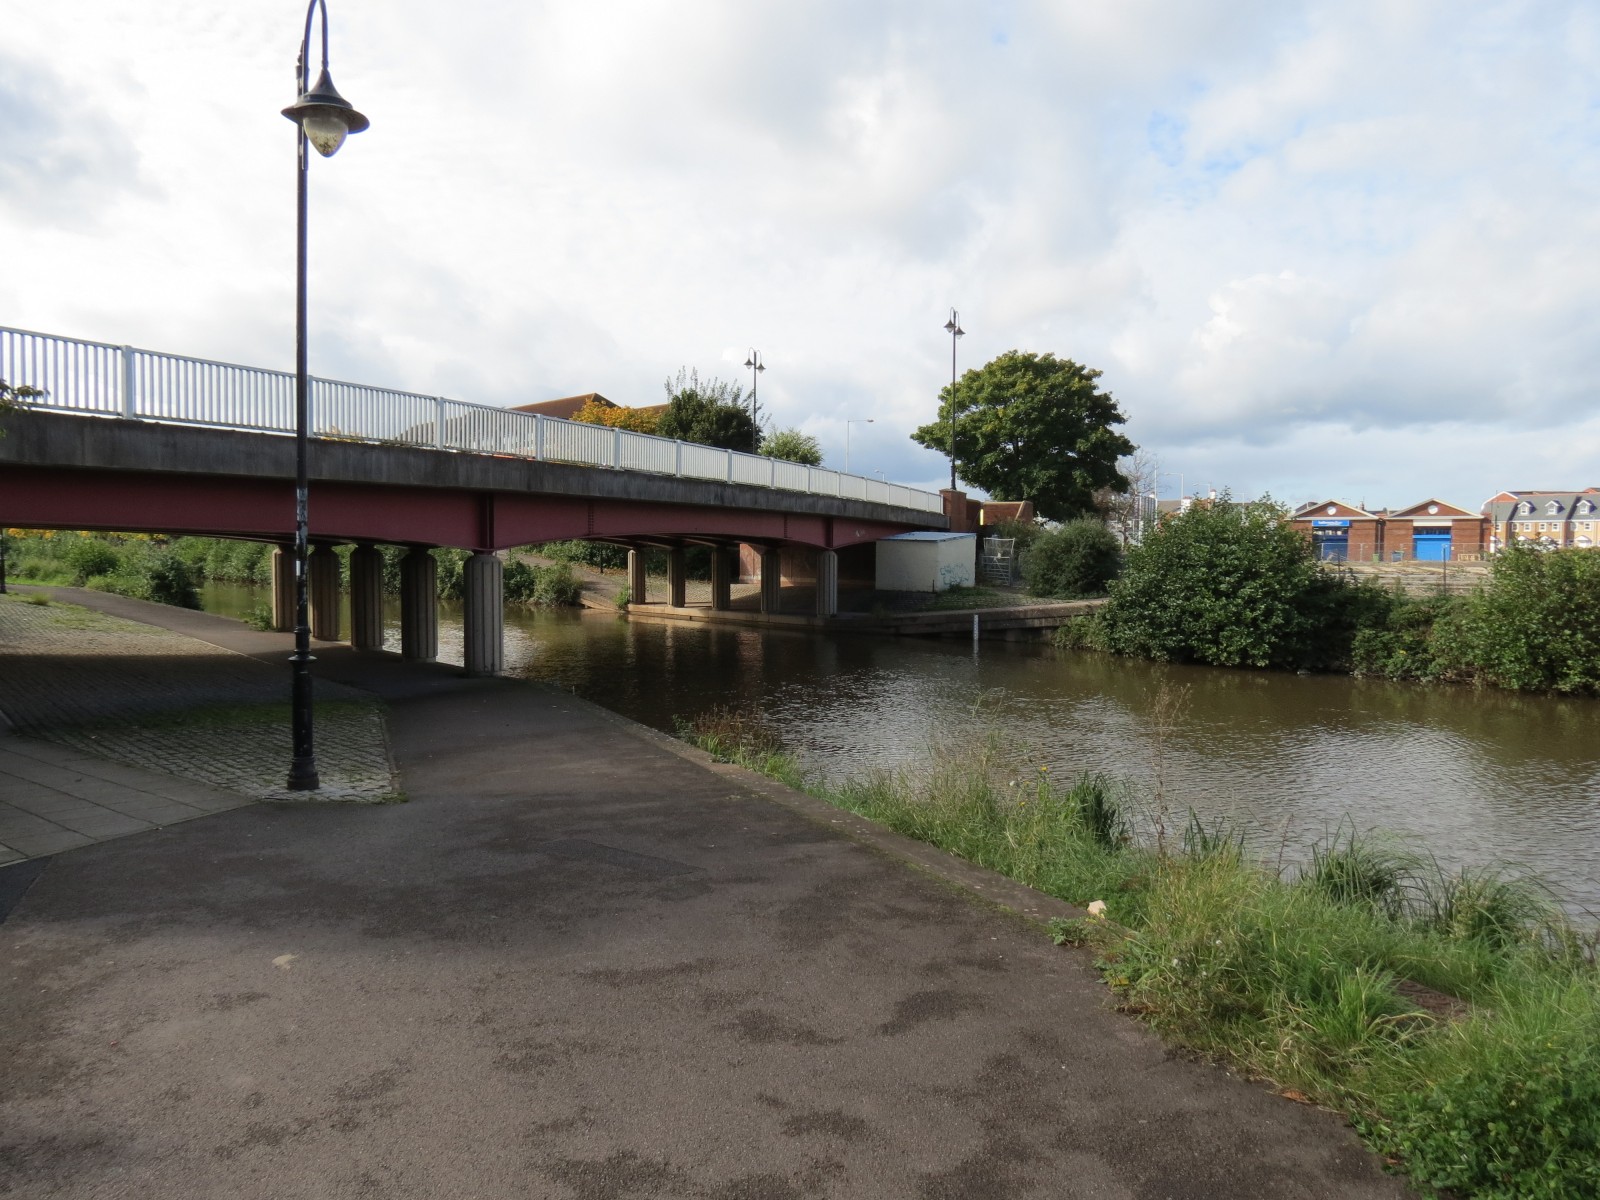 61.-Priory-Road-bridge-downstream-face